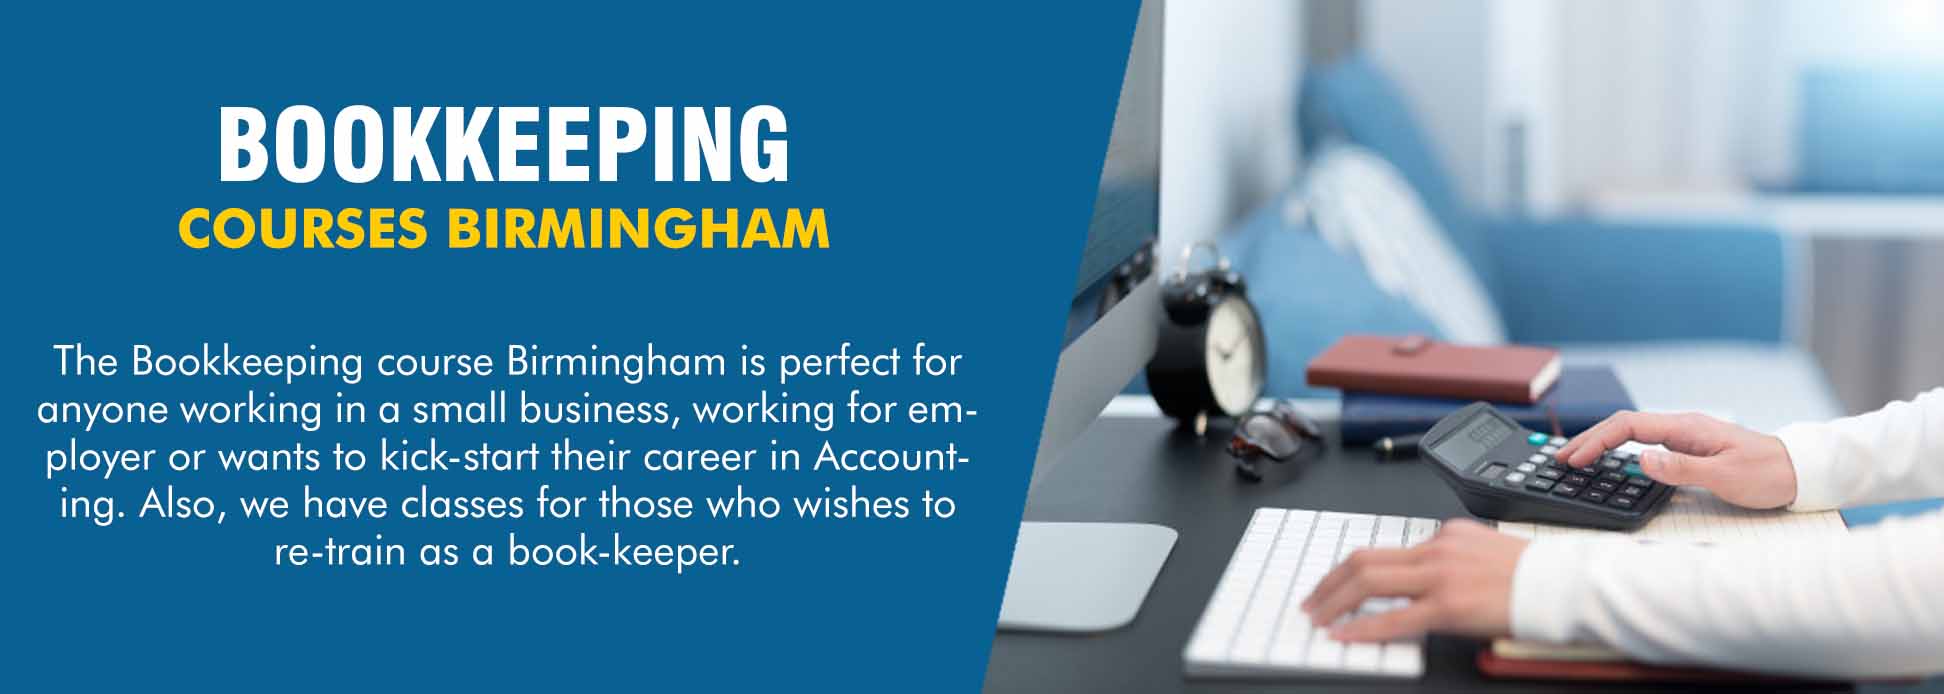 bookkeeping-course-birmingham